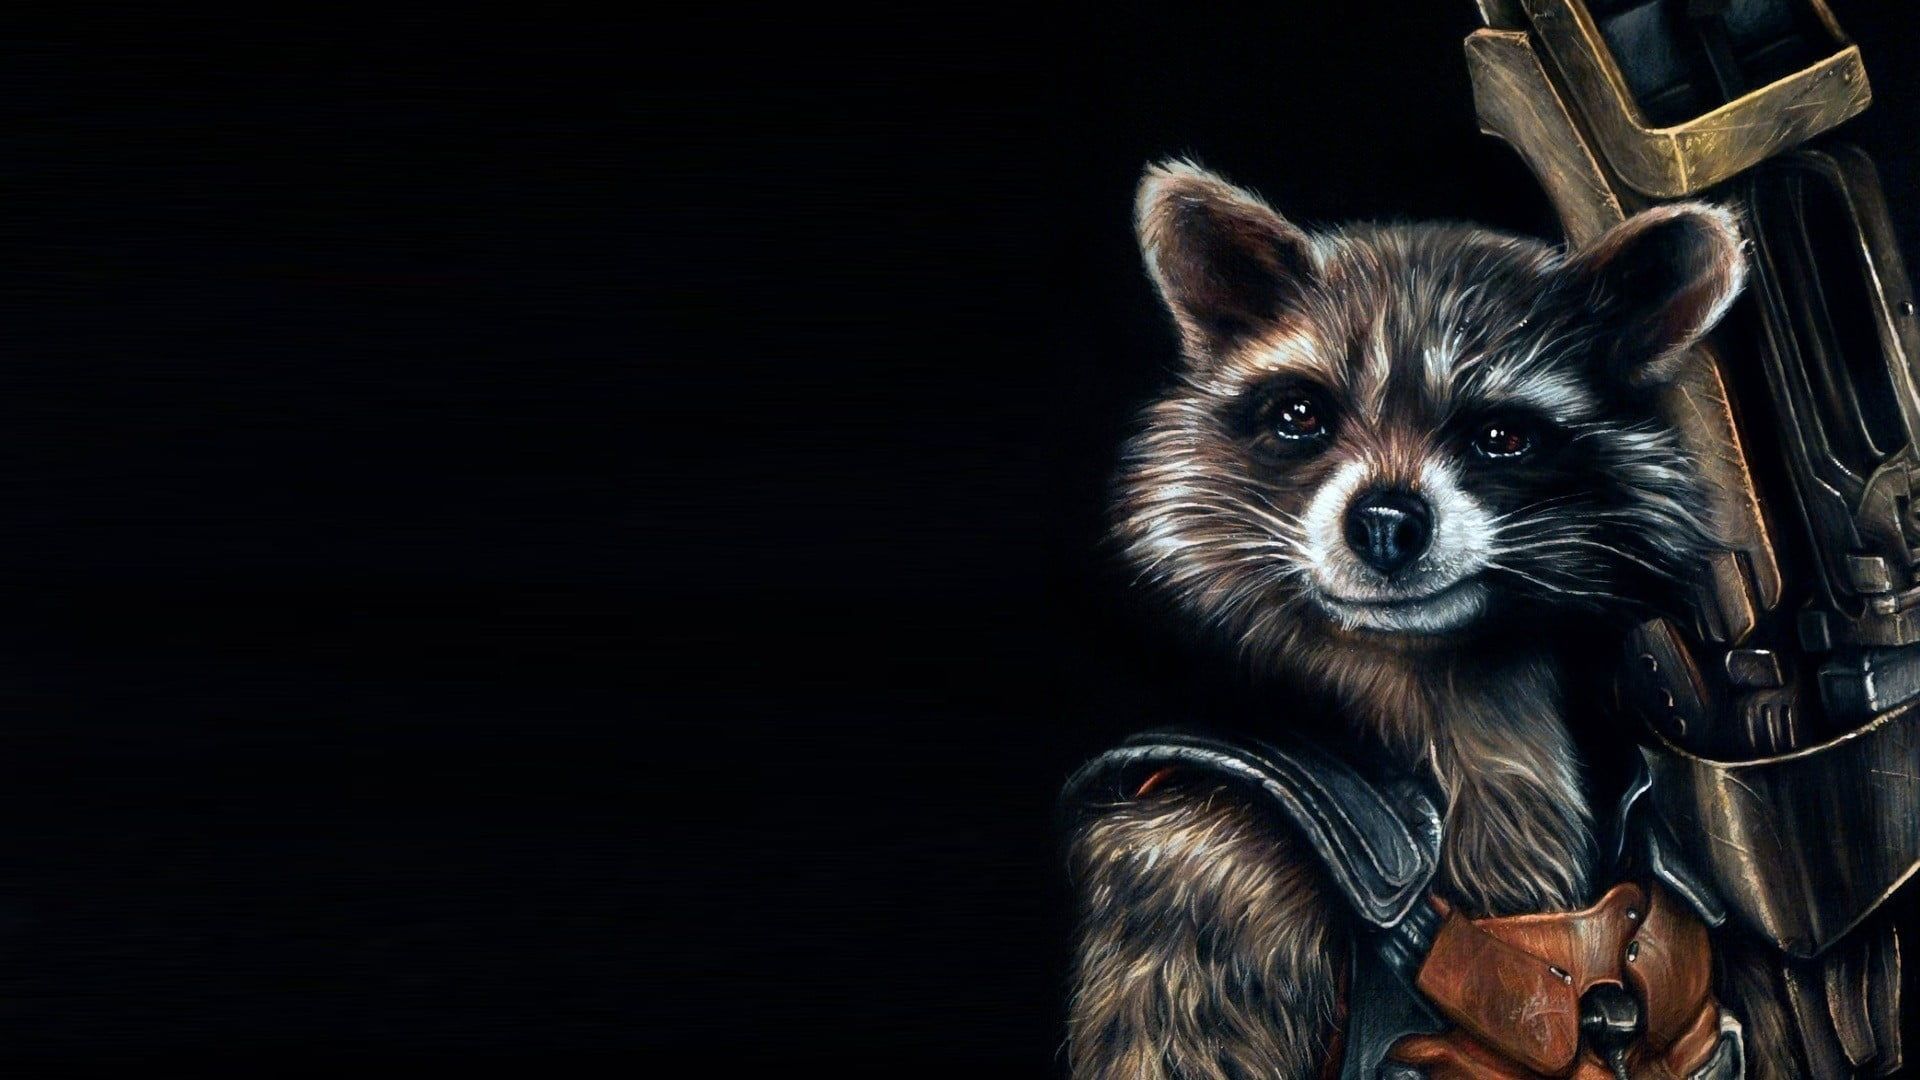 Guardians of the Galaxy Rocket Raccoon digital wallpaper Guardians of the Galaxy #comics #movies Rocket Raccoon #artwor. Rocket raccoon, Raccoon, Marvel wallpaper